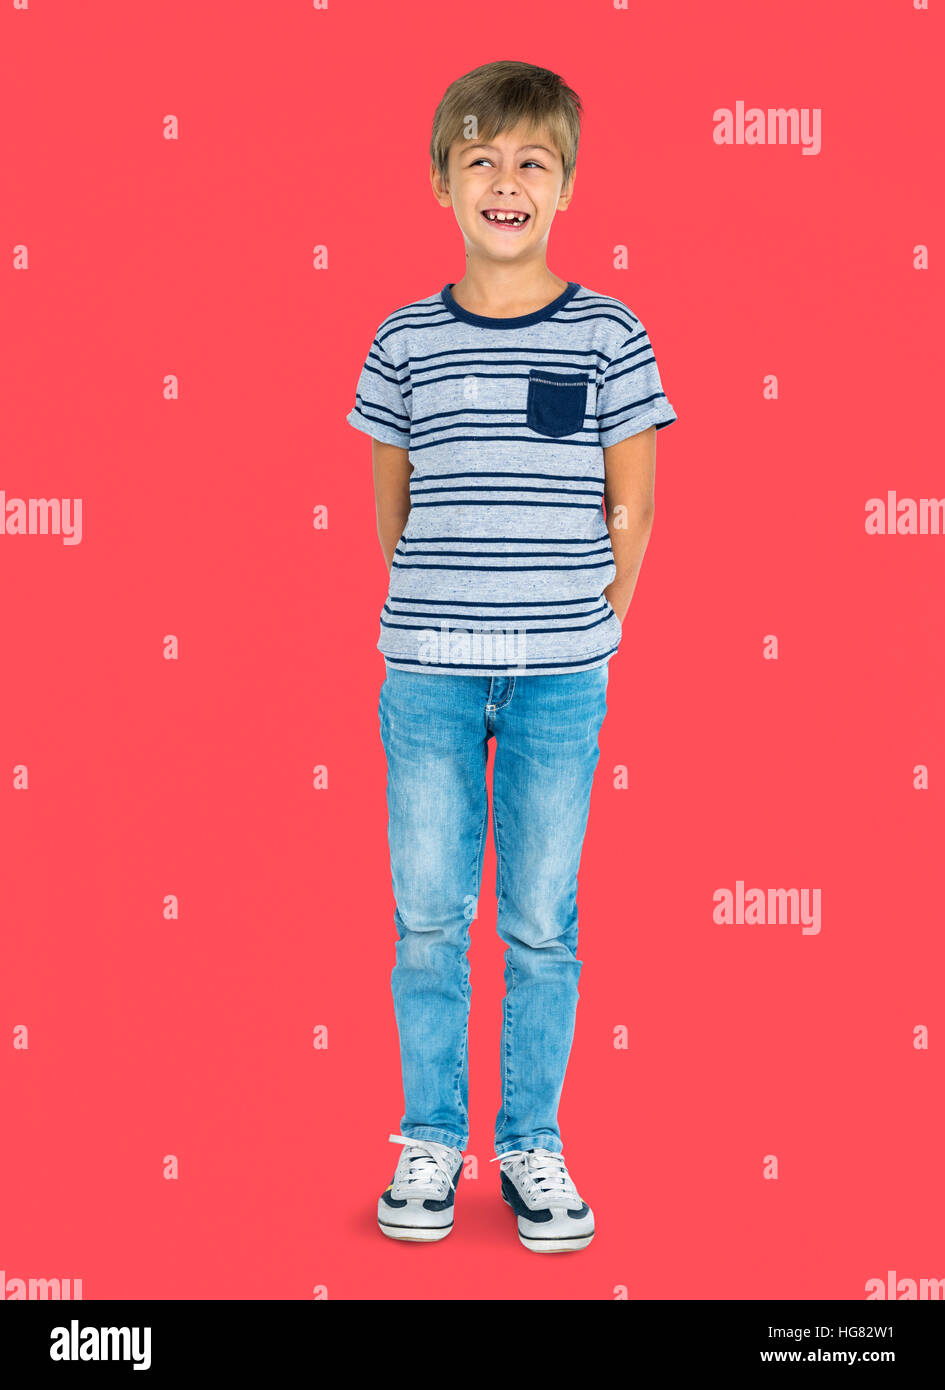 Little Boy Smiling Happiness Portrait Concept Stock Photo